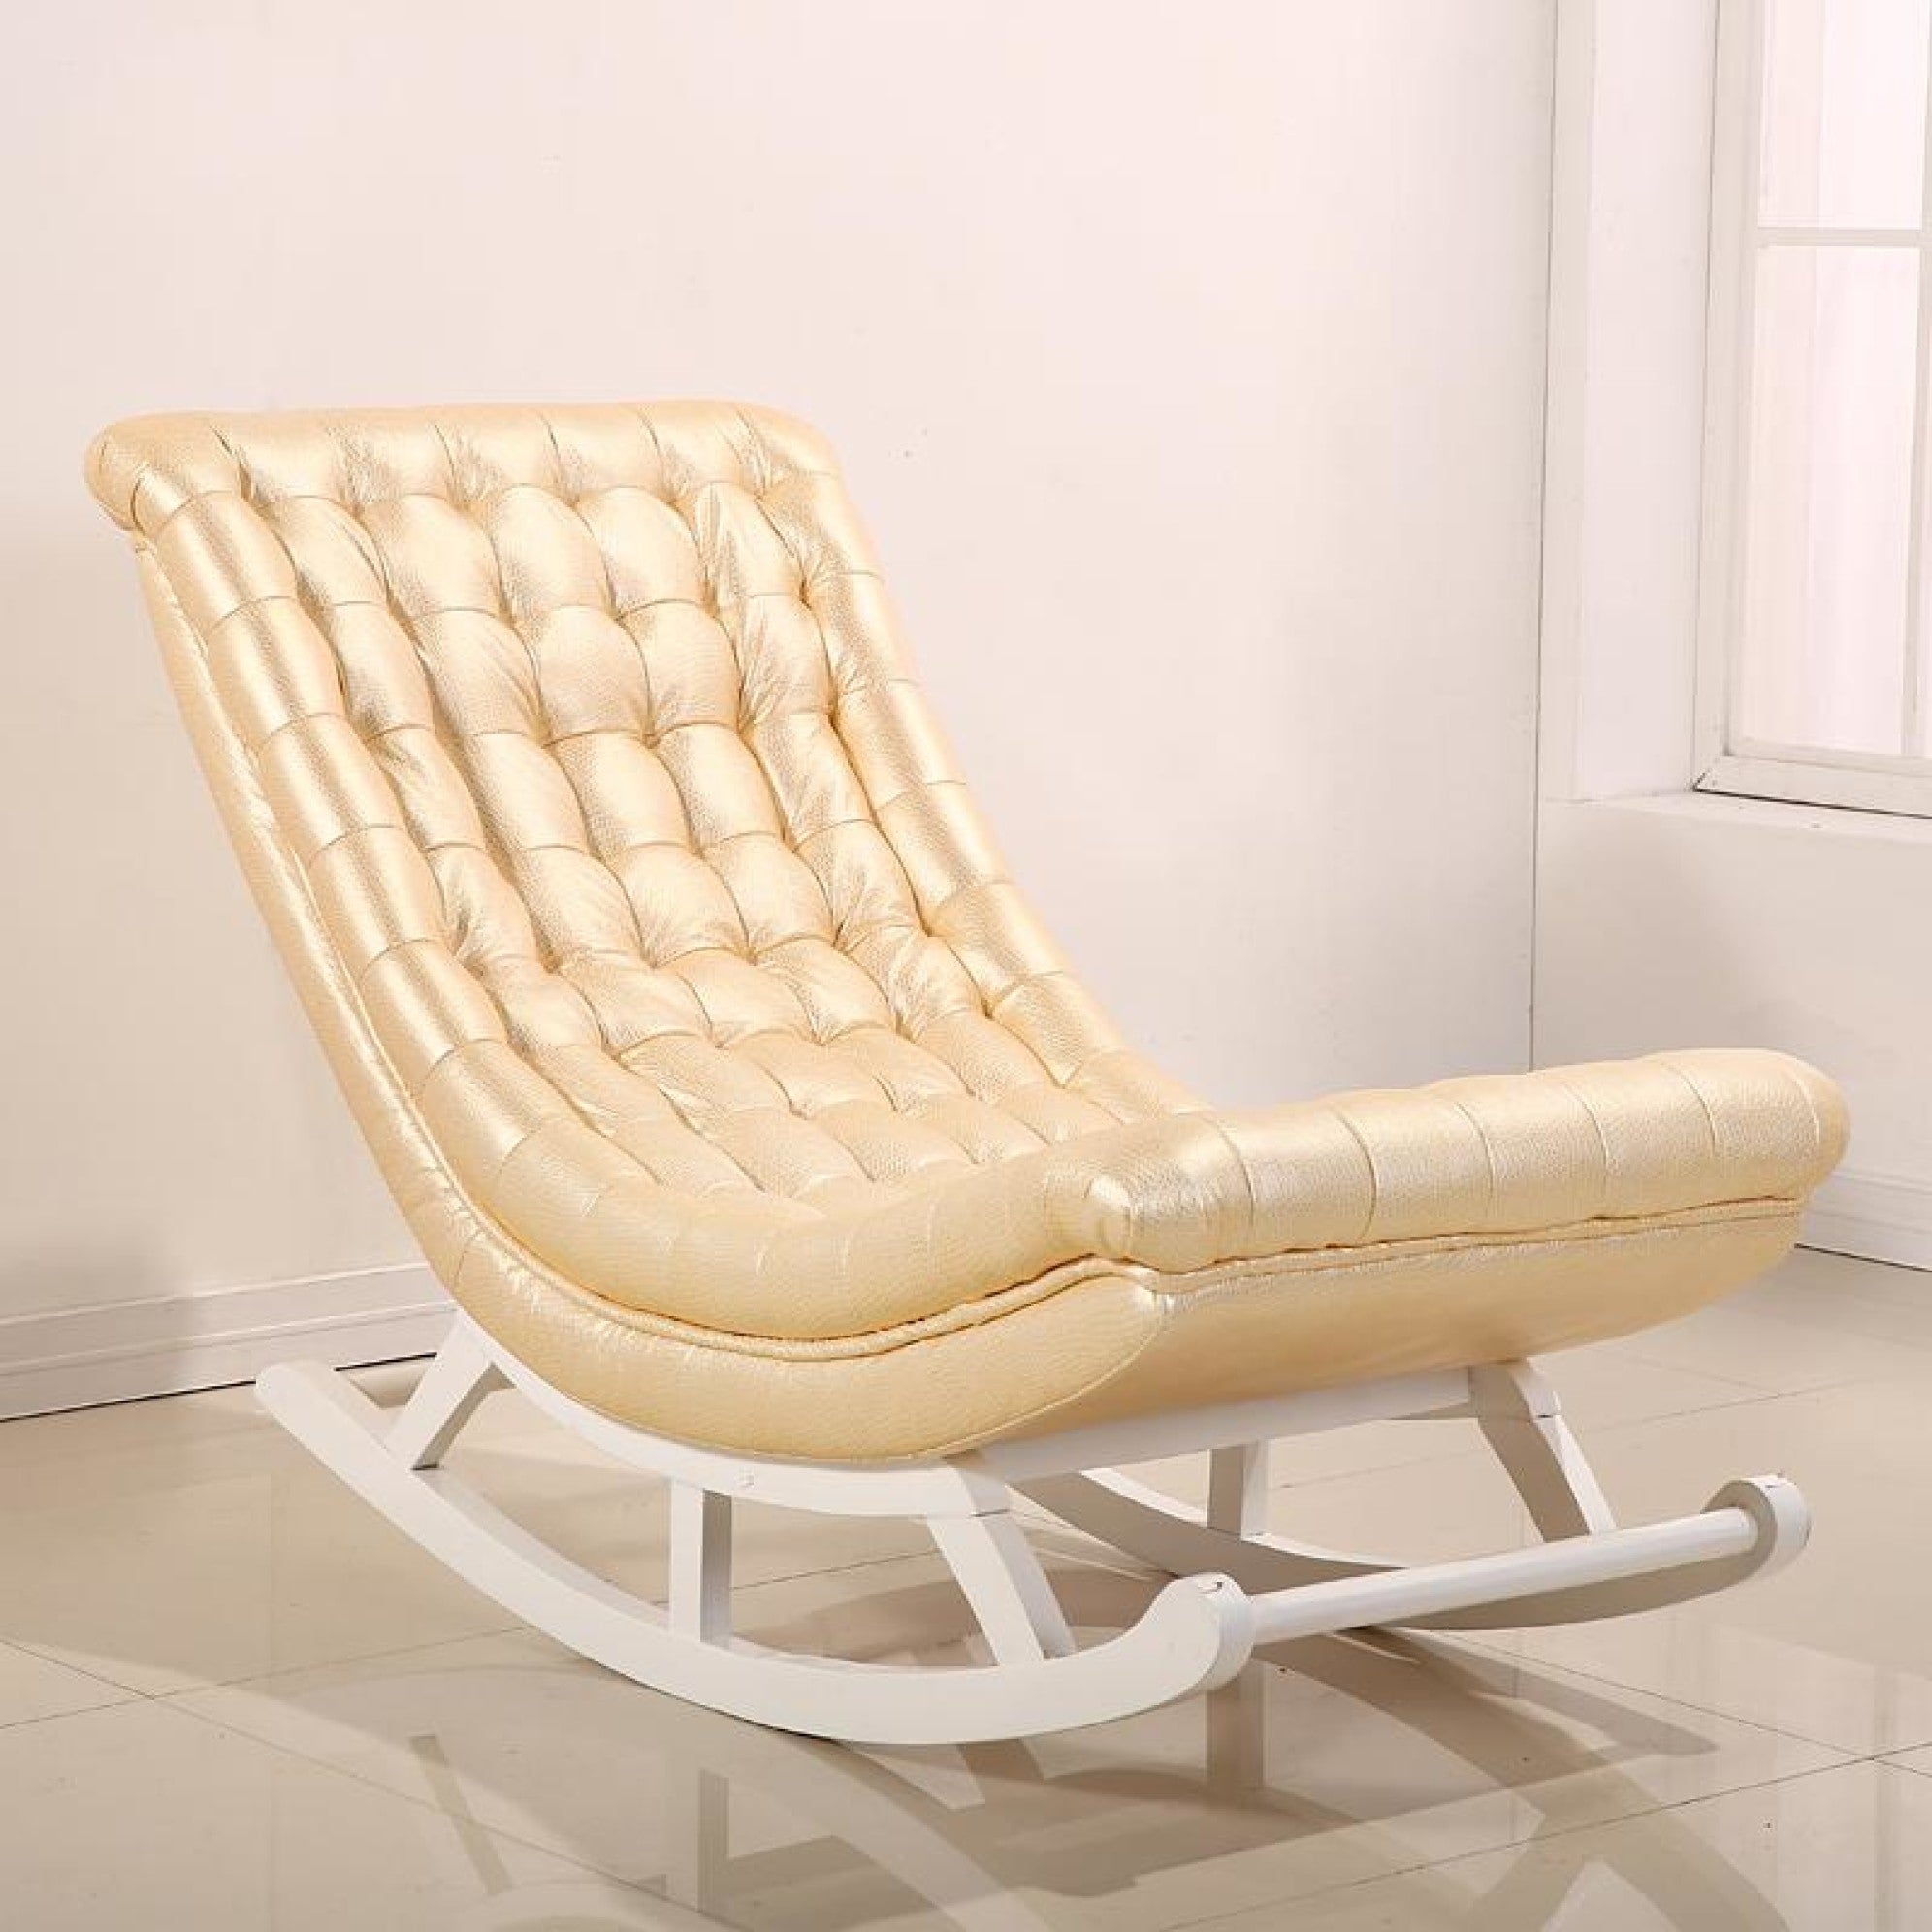 raket vlotter afbreken Glossy Leather Rocking Chair - Online Furniture Store - My Aashis